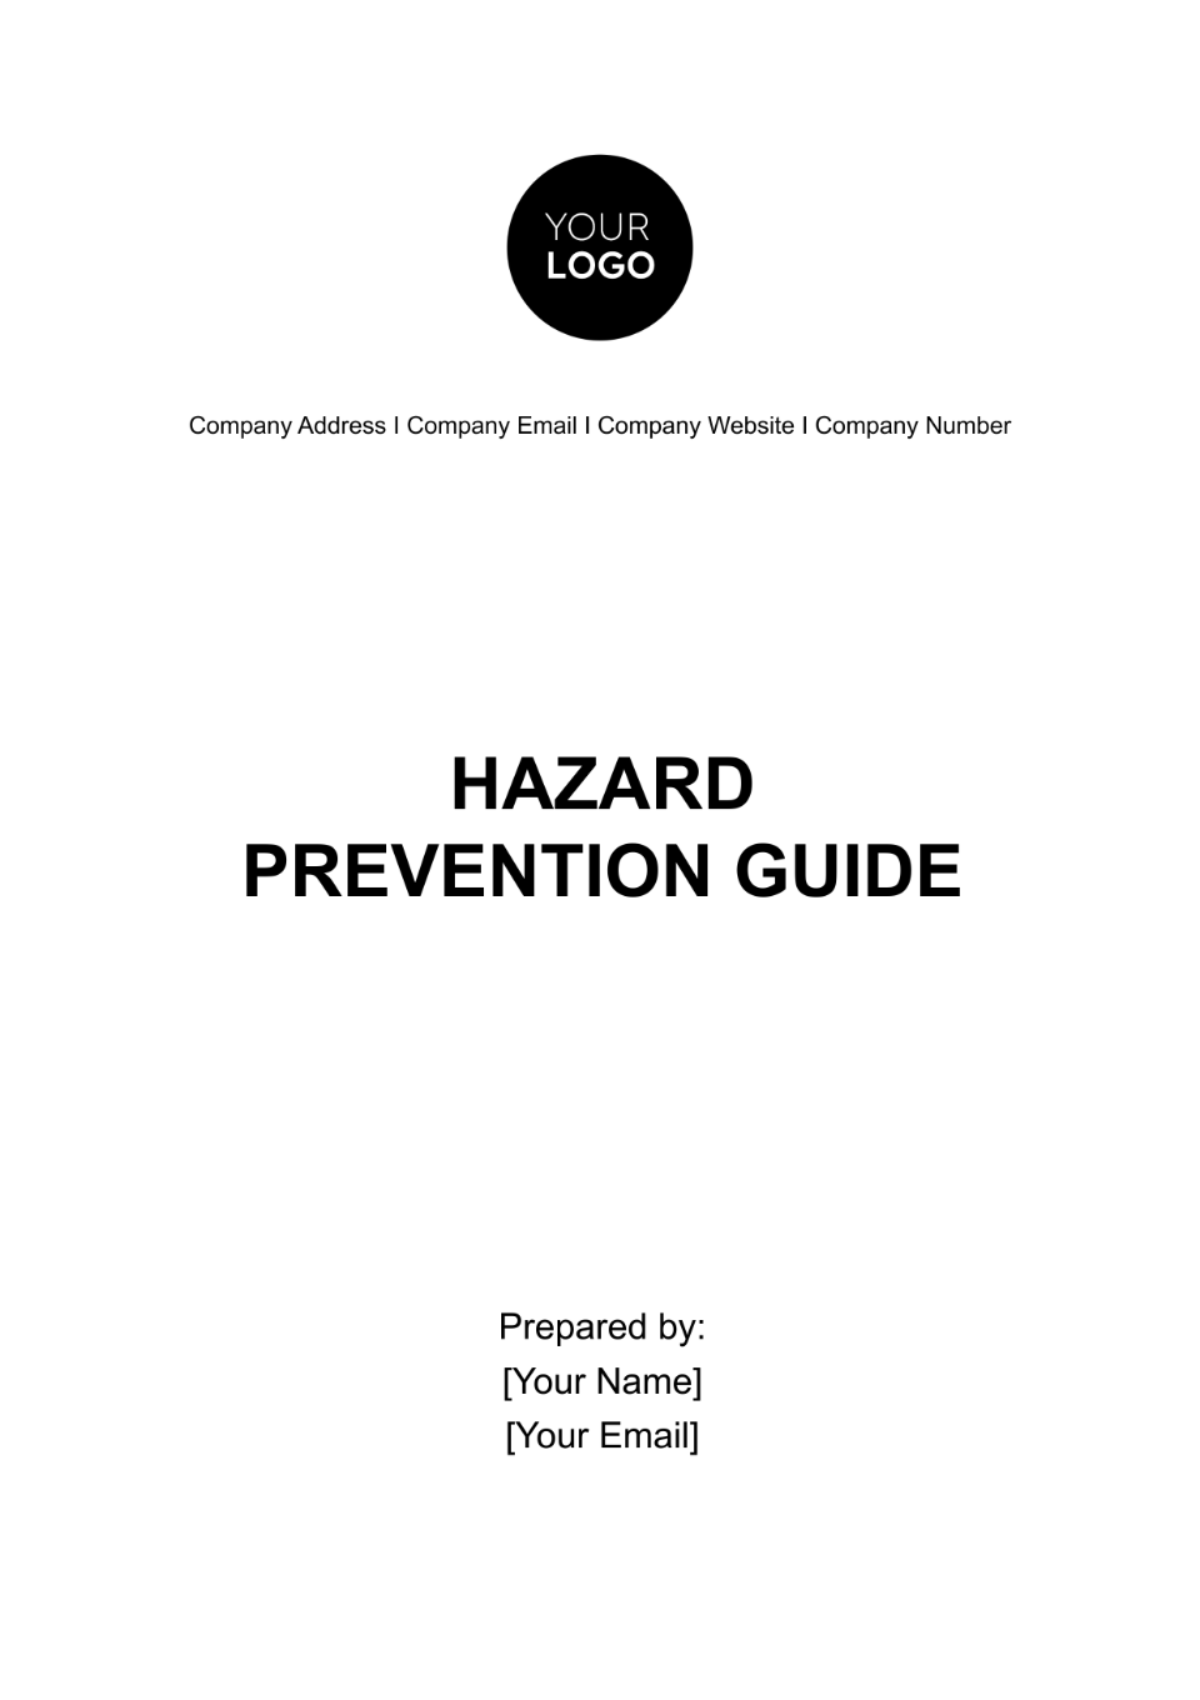 Hazard Prevention Guide Template